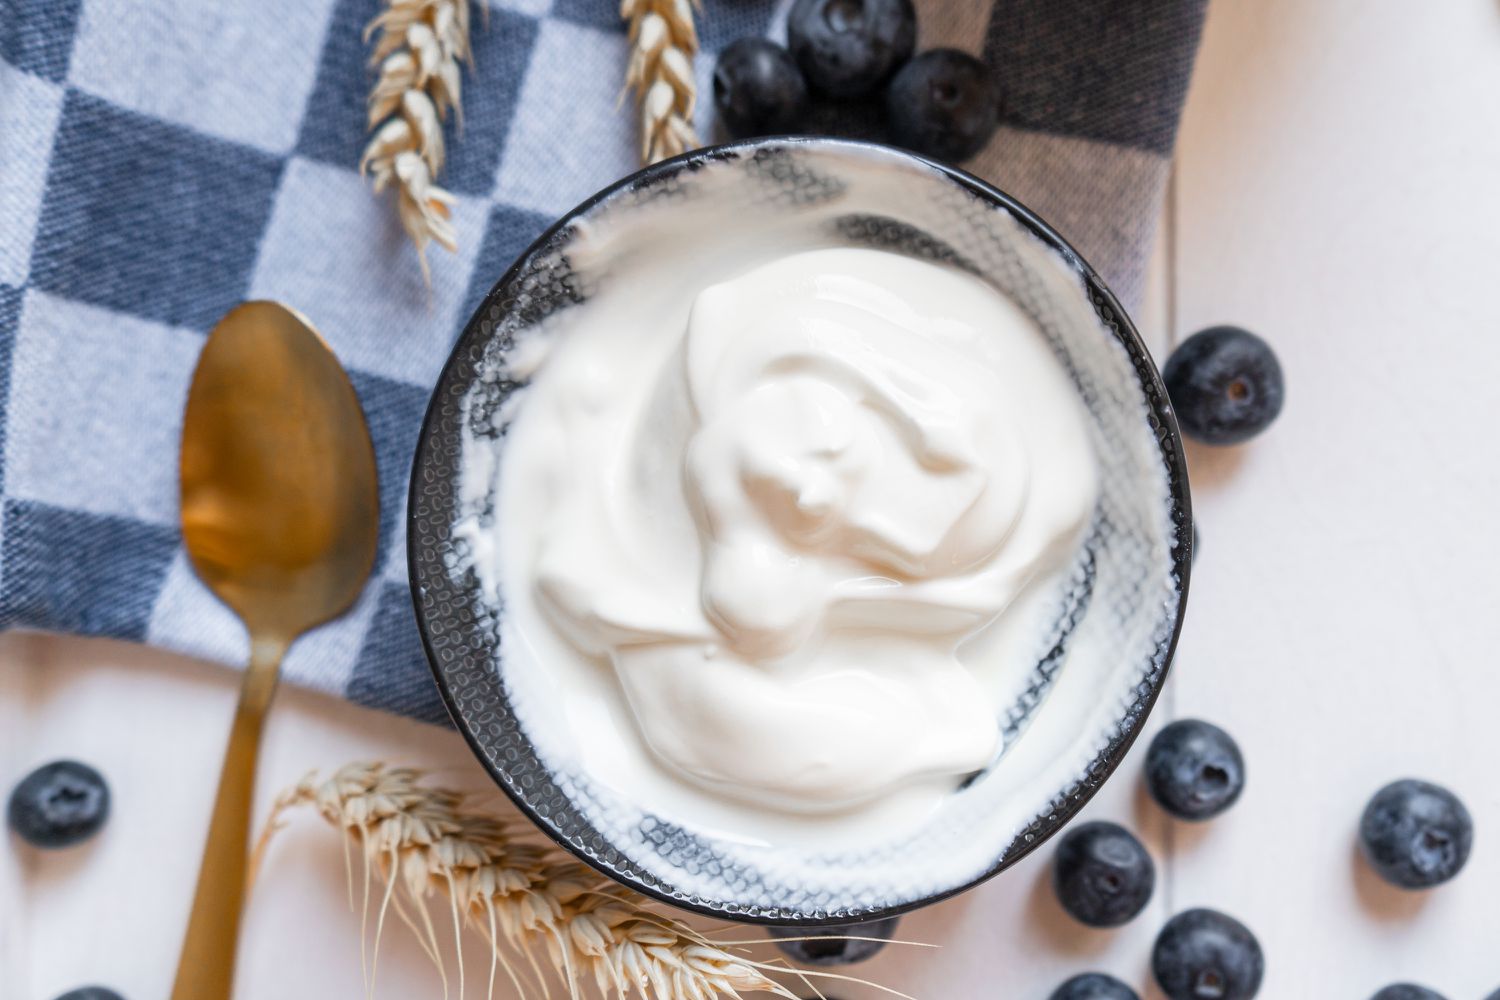 Having yogurt as part of a healthy diet has 9 benefits.